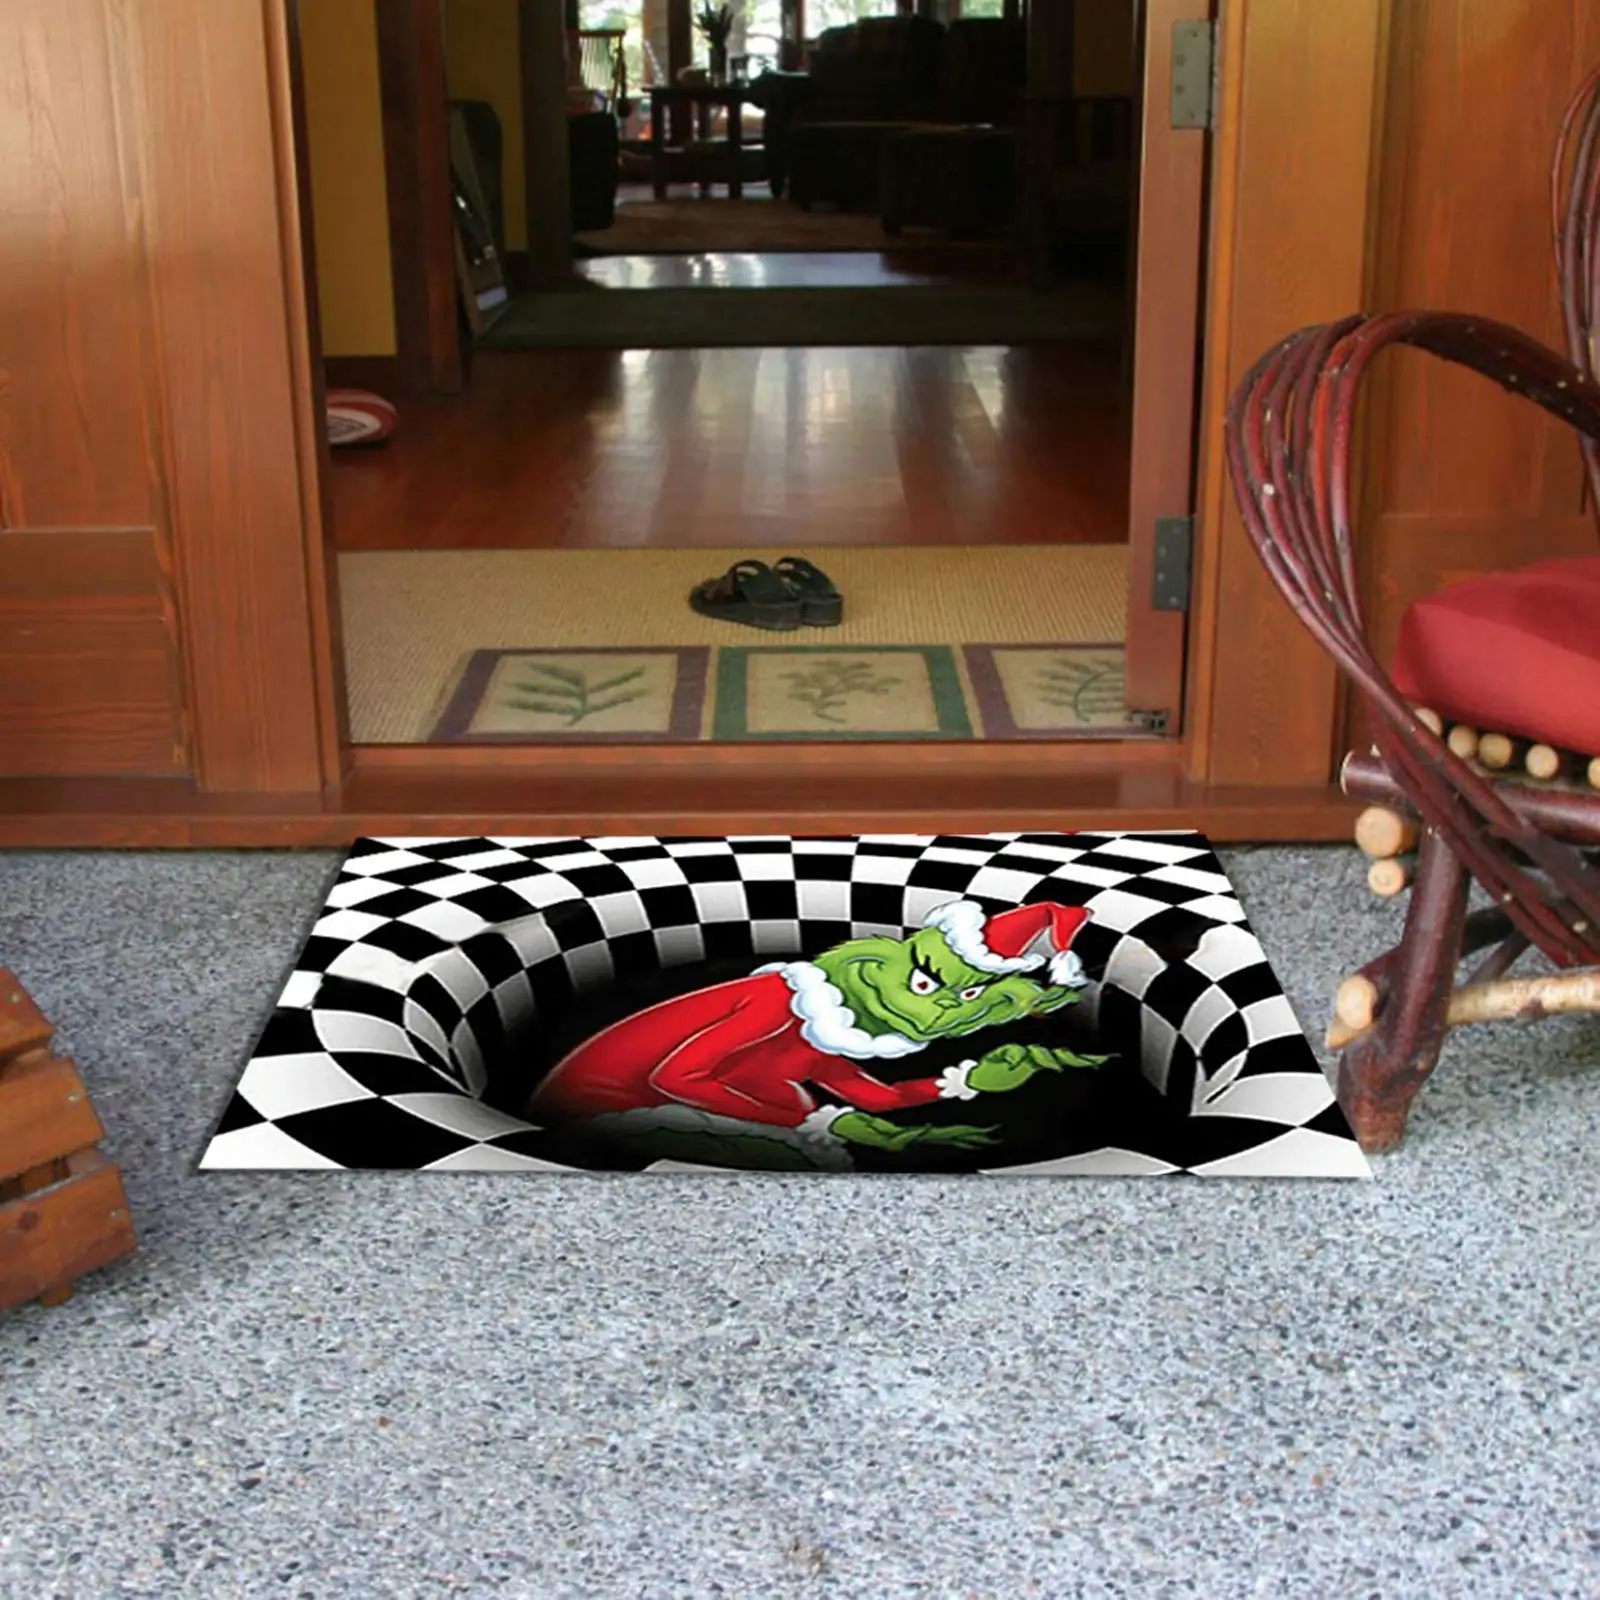 casapre Illusion Doormat,Christmas Non-Slip Visual Door Mat,for Christmas Indoor Outdoor Home Party